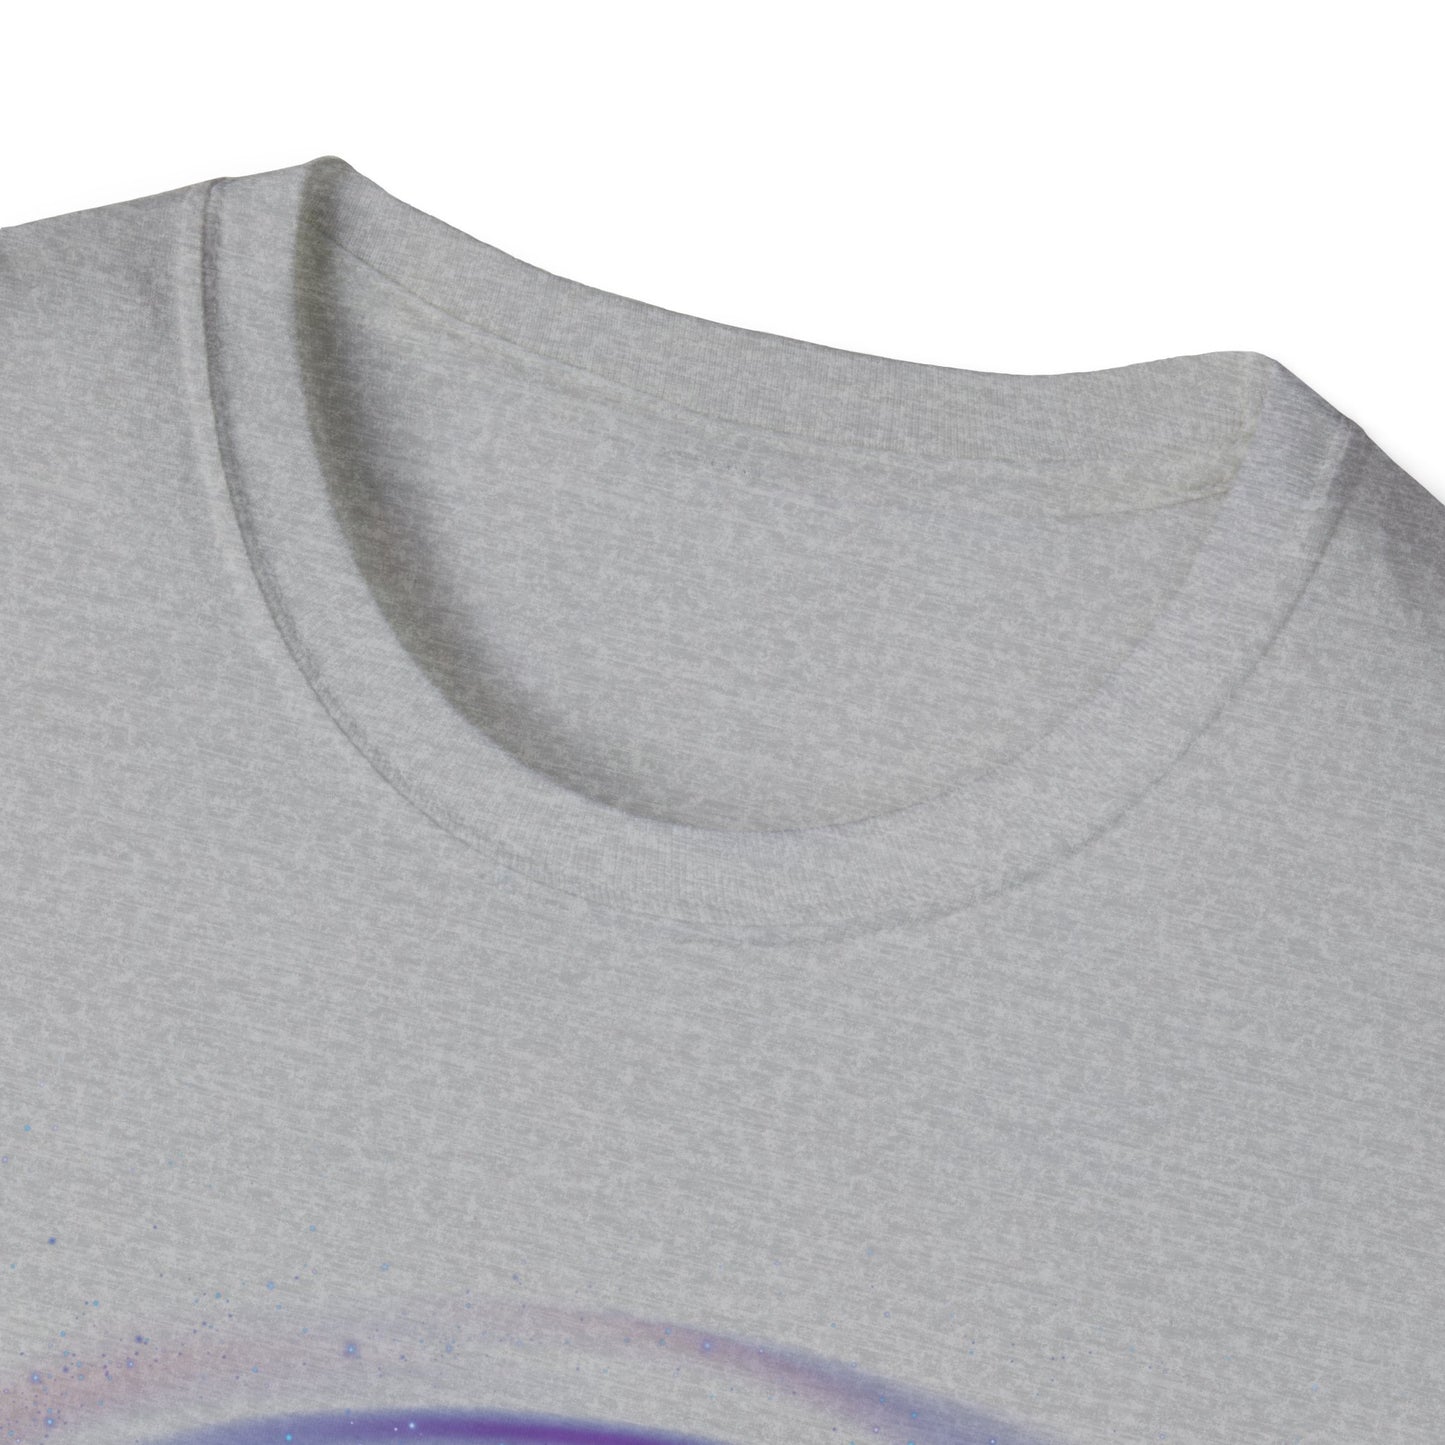 Camiseta manga corta unisex, con frase en inglés del sistema solar